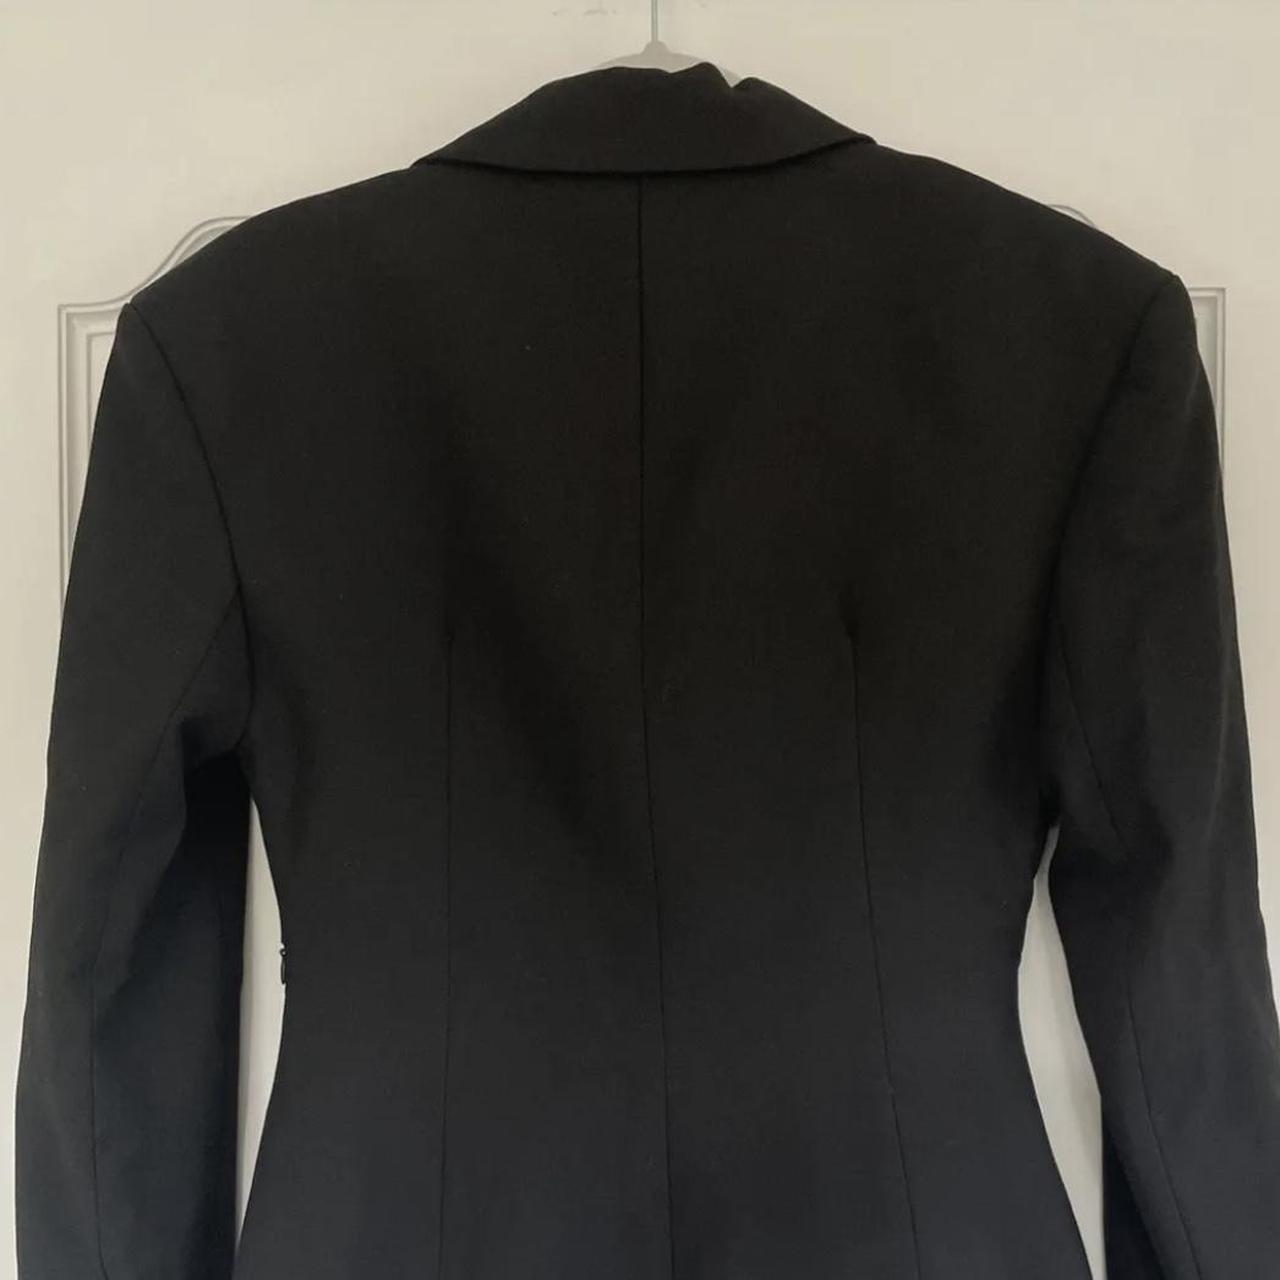 Sold out limited edition Zara Black Blazer Dress.... - Depop